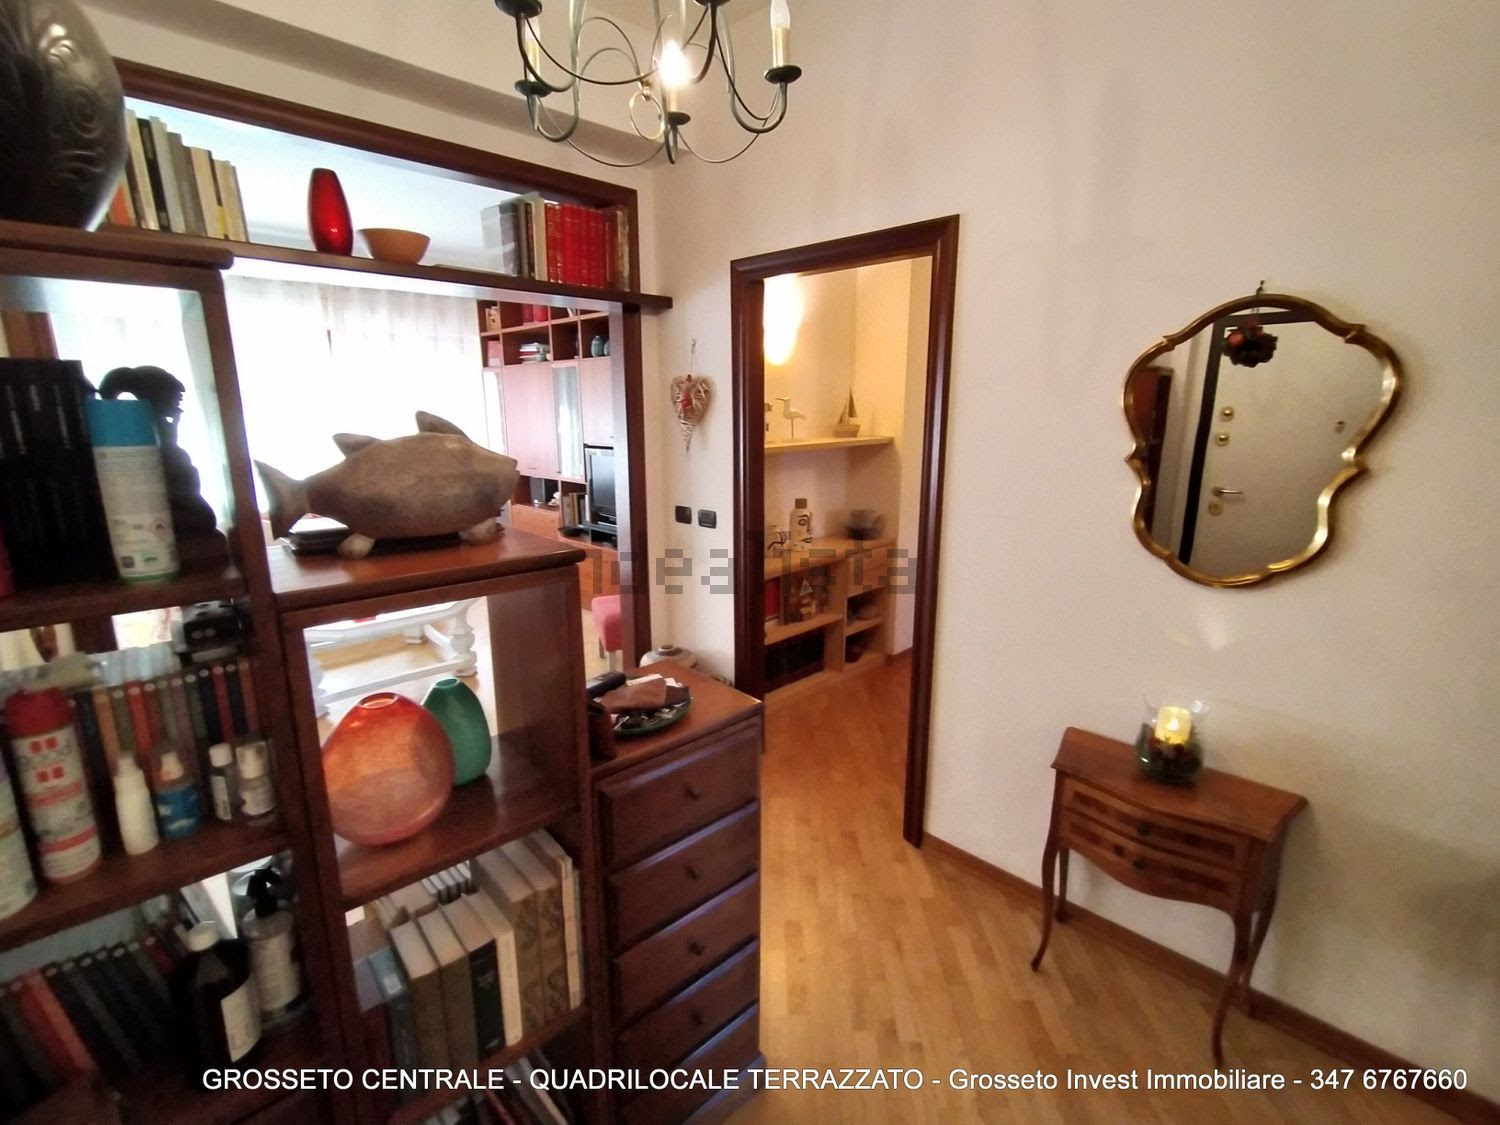 Grosseto Invest di Luigi Ciampi vendita appartamento Ingresso di Quadrilocale vendita via Depretis, 30, Centro, Grosseto